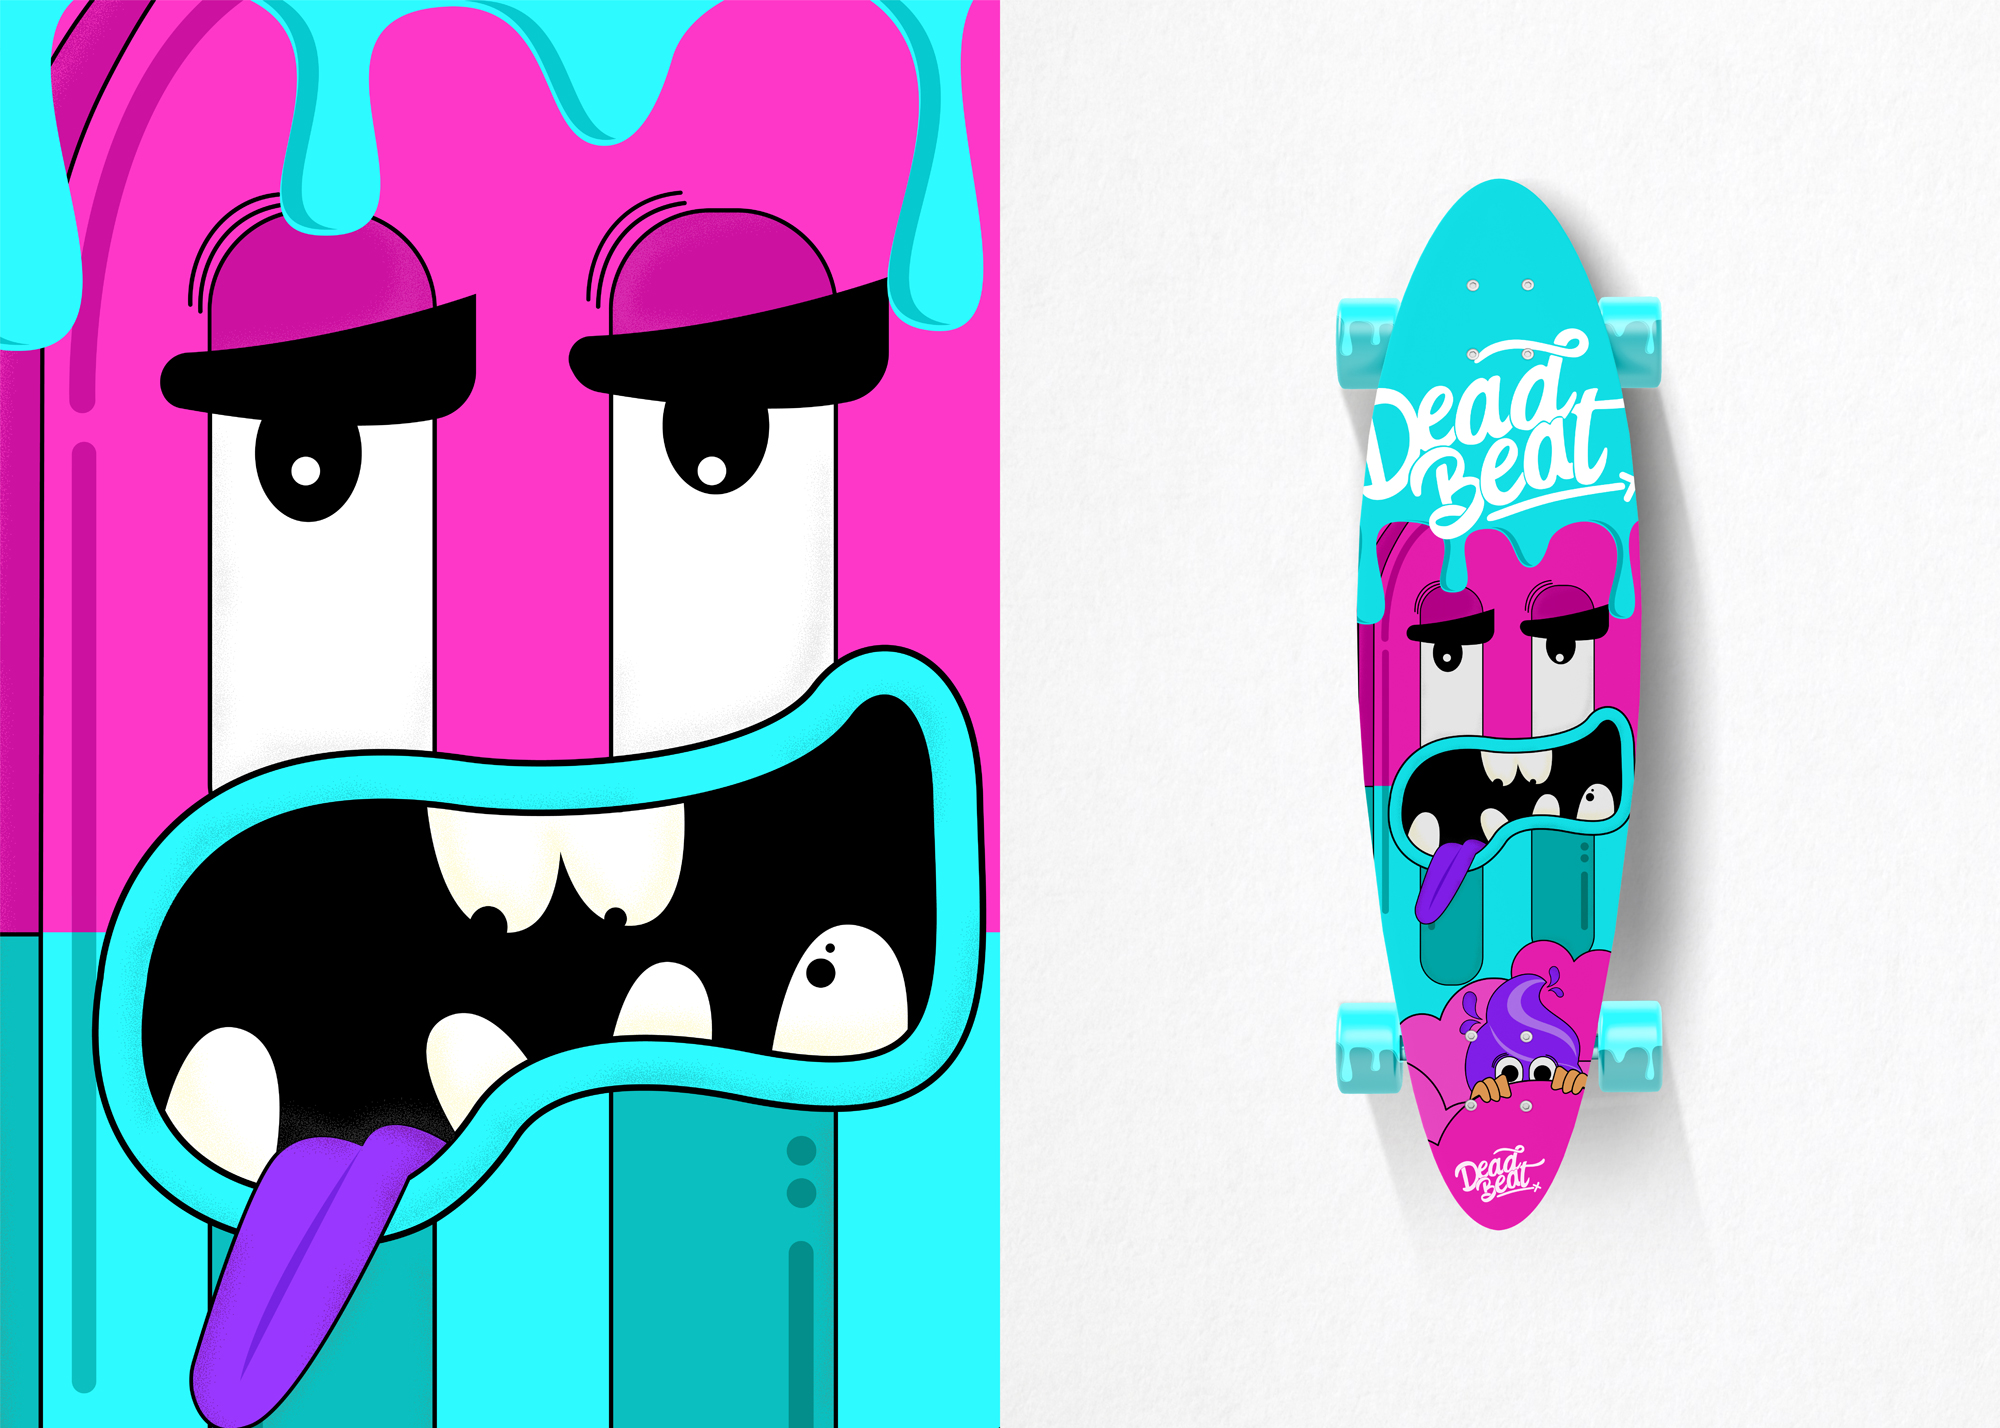 Deadbeat skate culture / Branding / Design / Art Direction